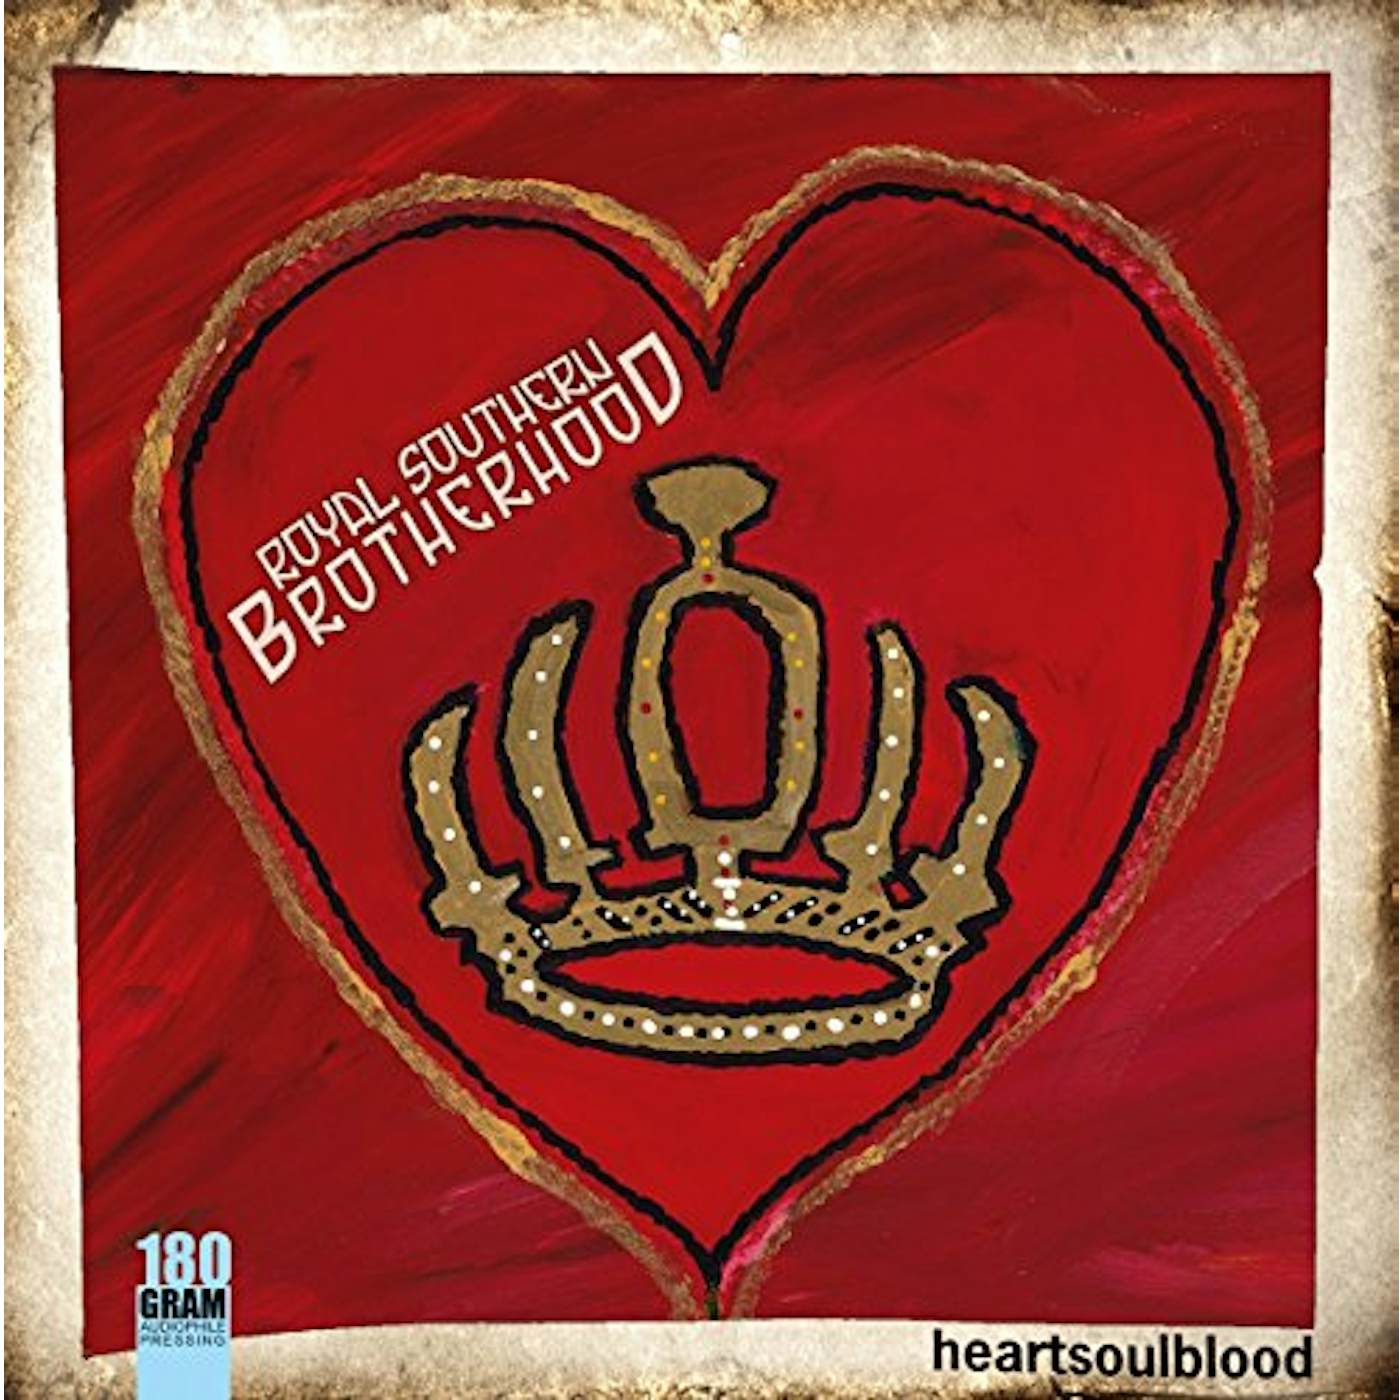 Royal Southern Brotherhood heartsoulblood Vinyl Record